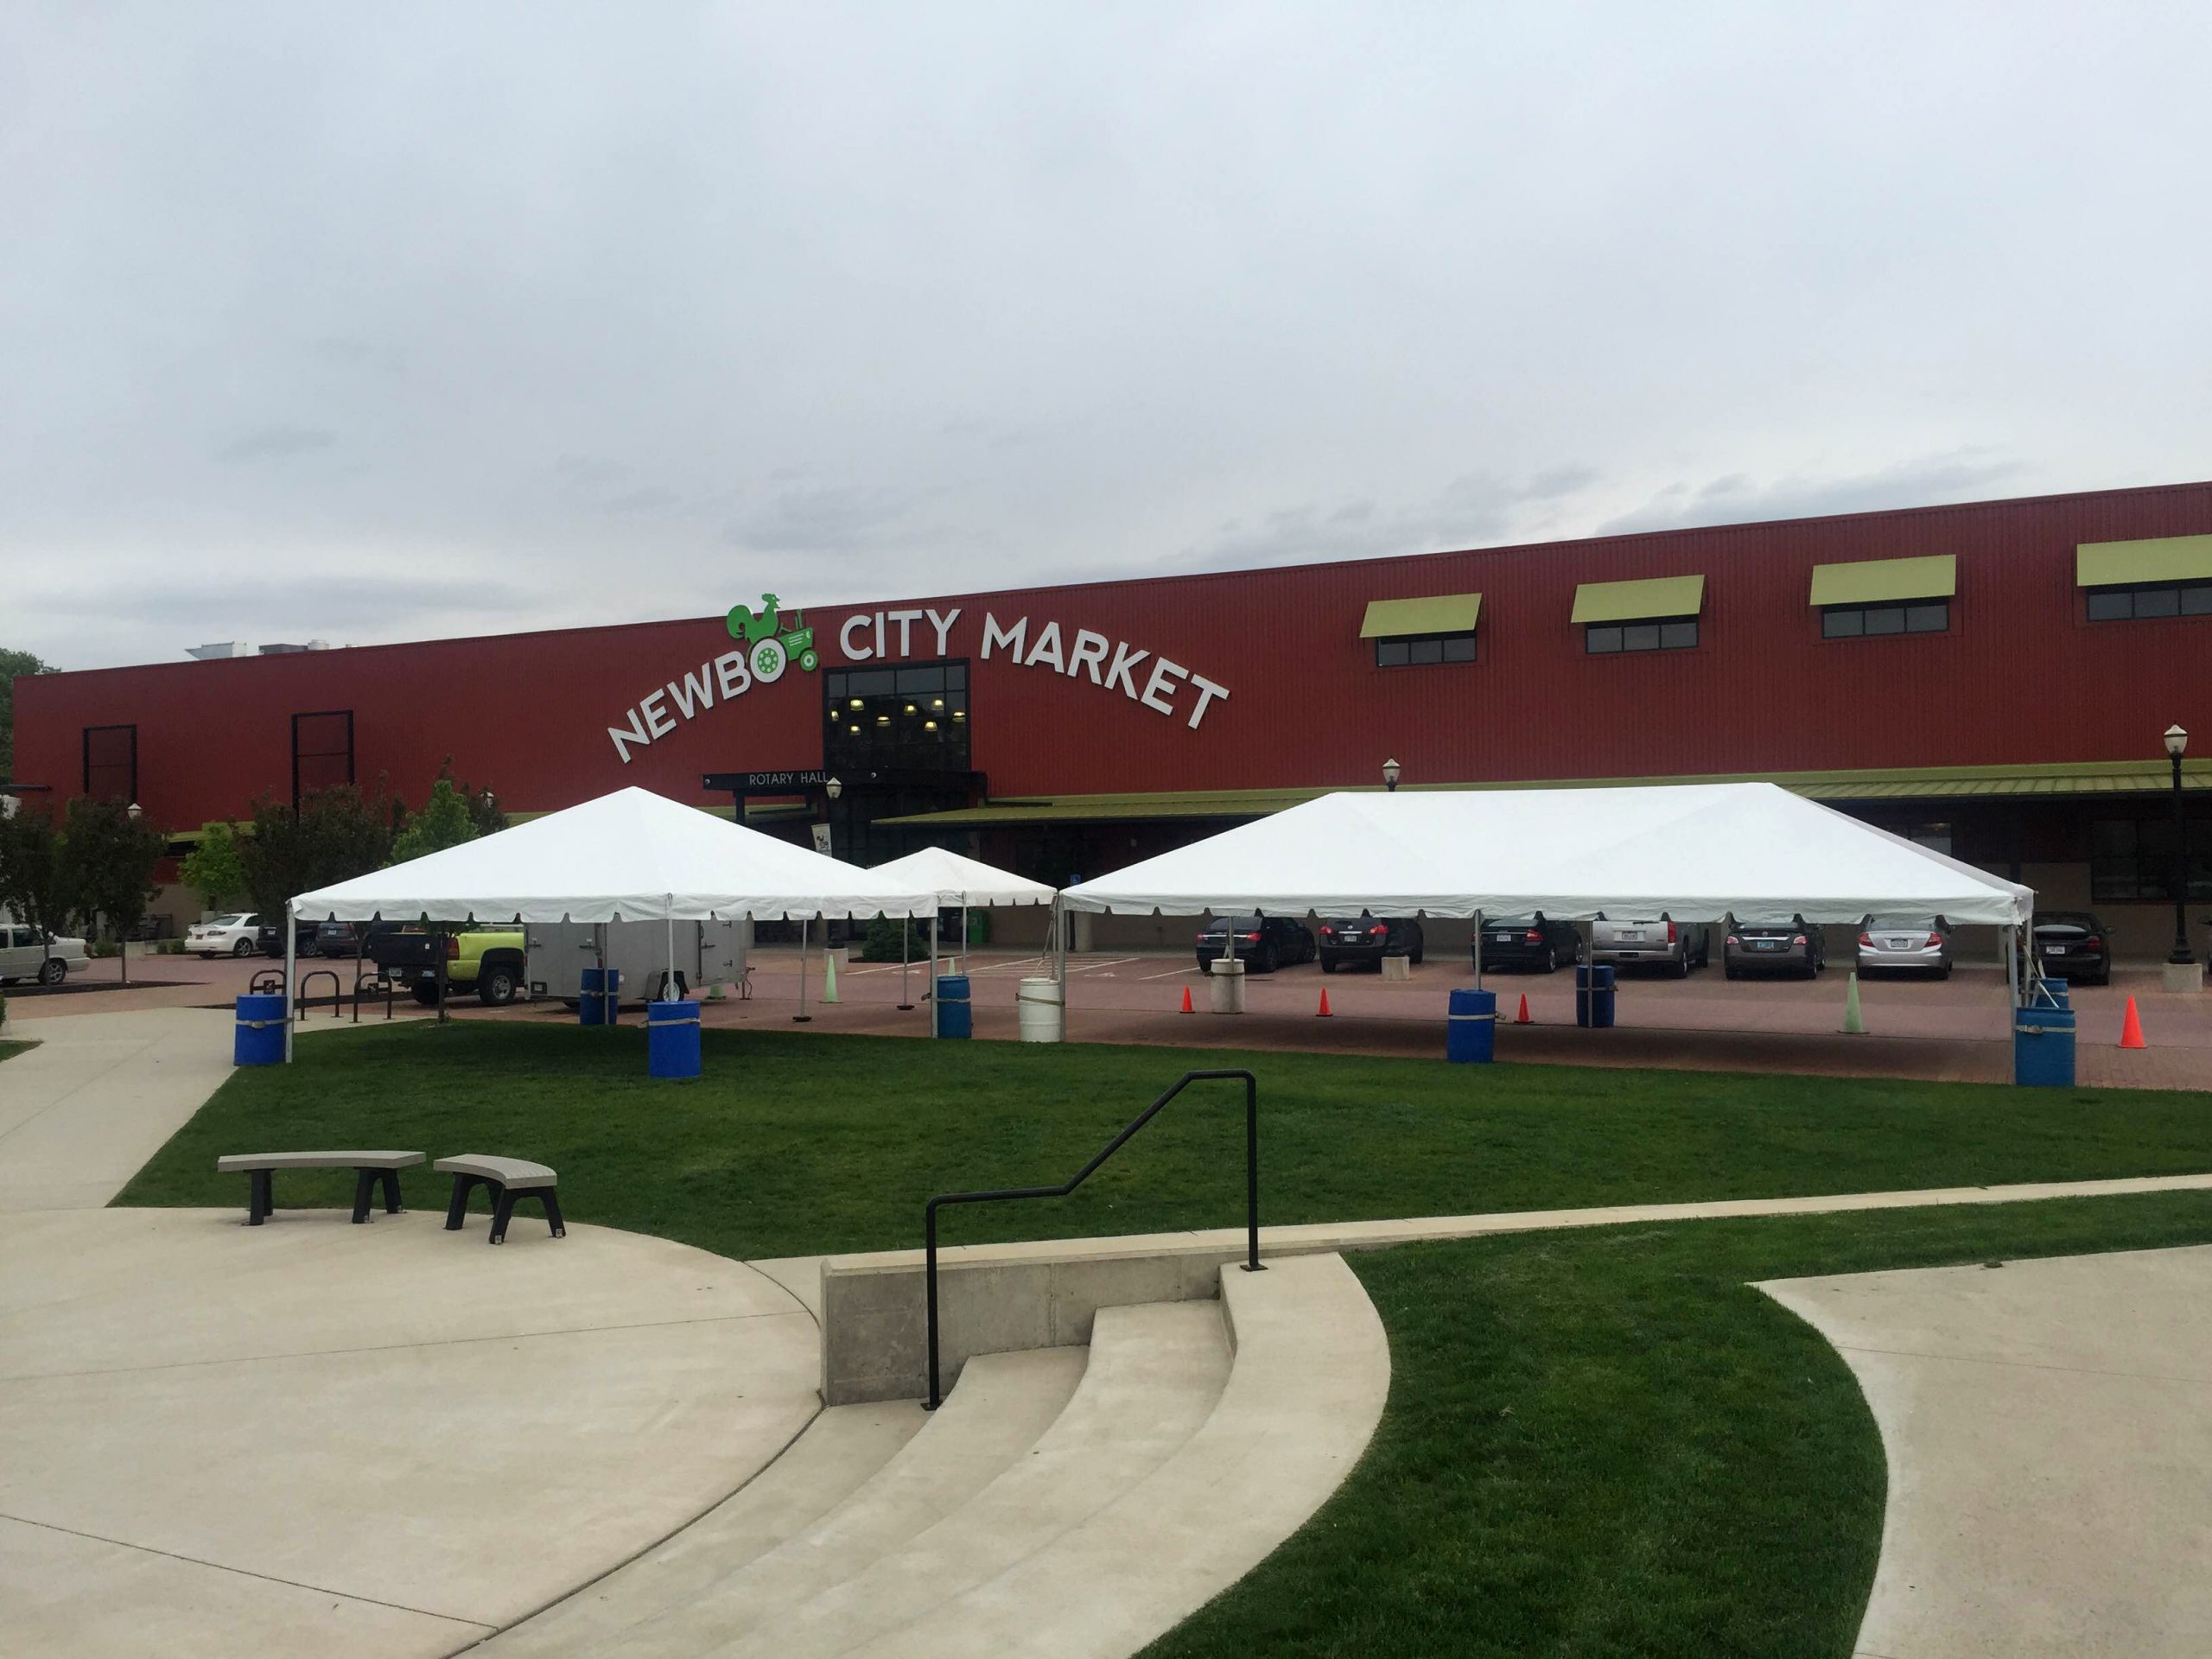 Tents for JDRF One Walk at NewBo City Market in Cedar Rapids, IA